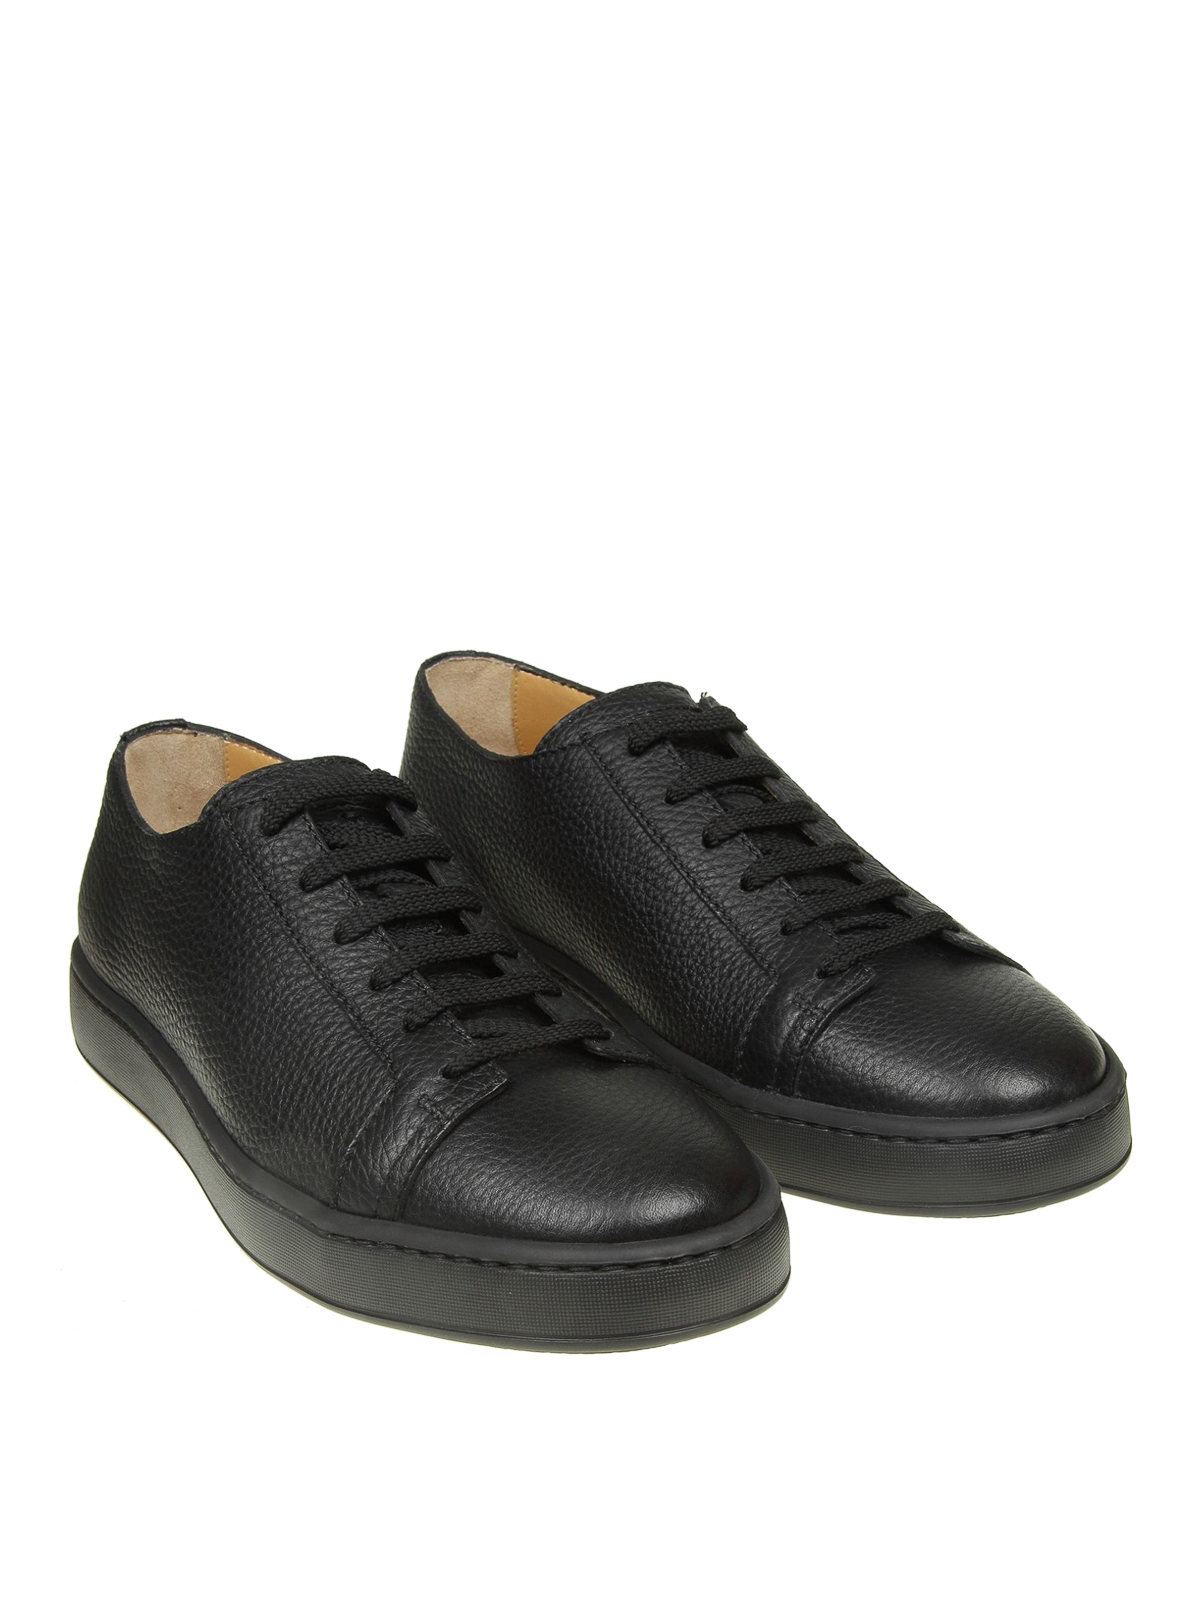 santoni shoes black friday